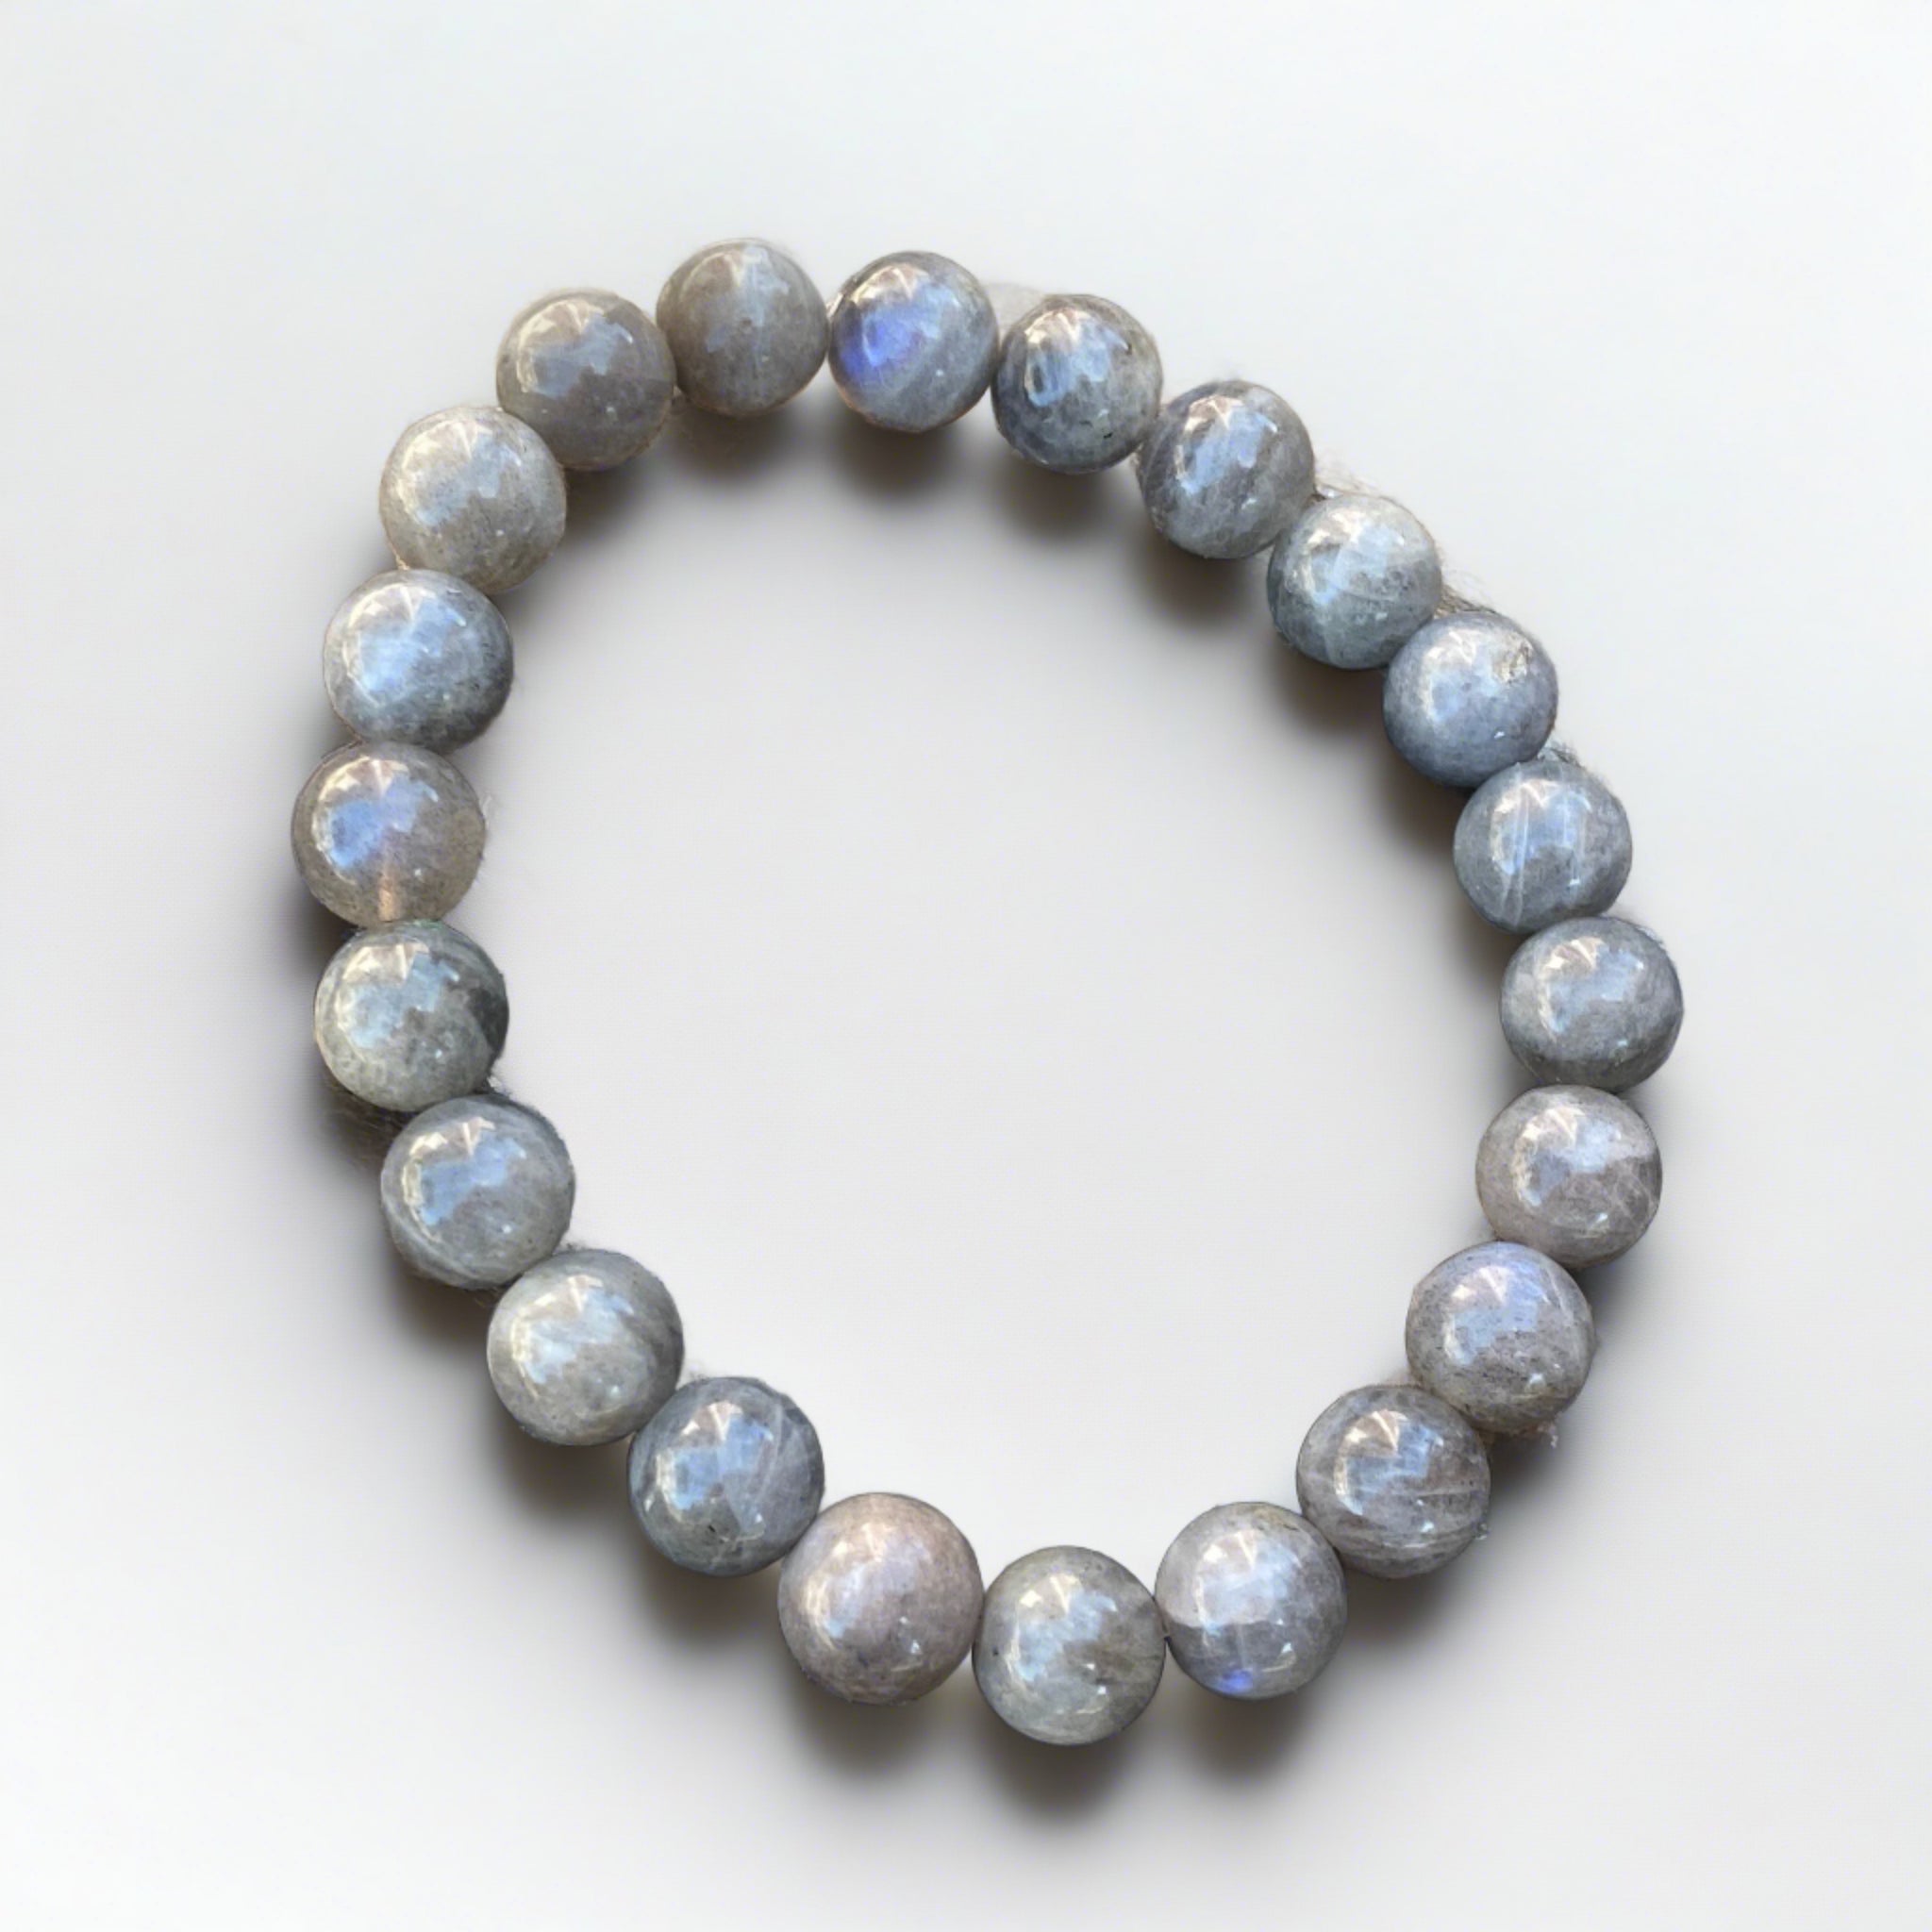 Labradorite gemstone mala bracelet for self-transformation